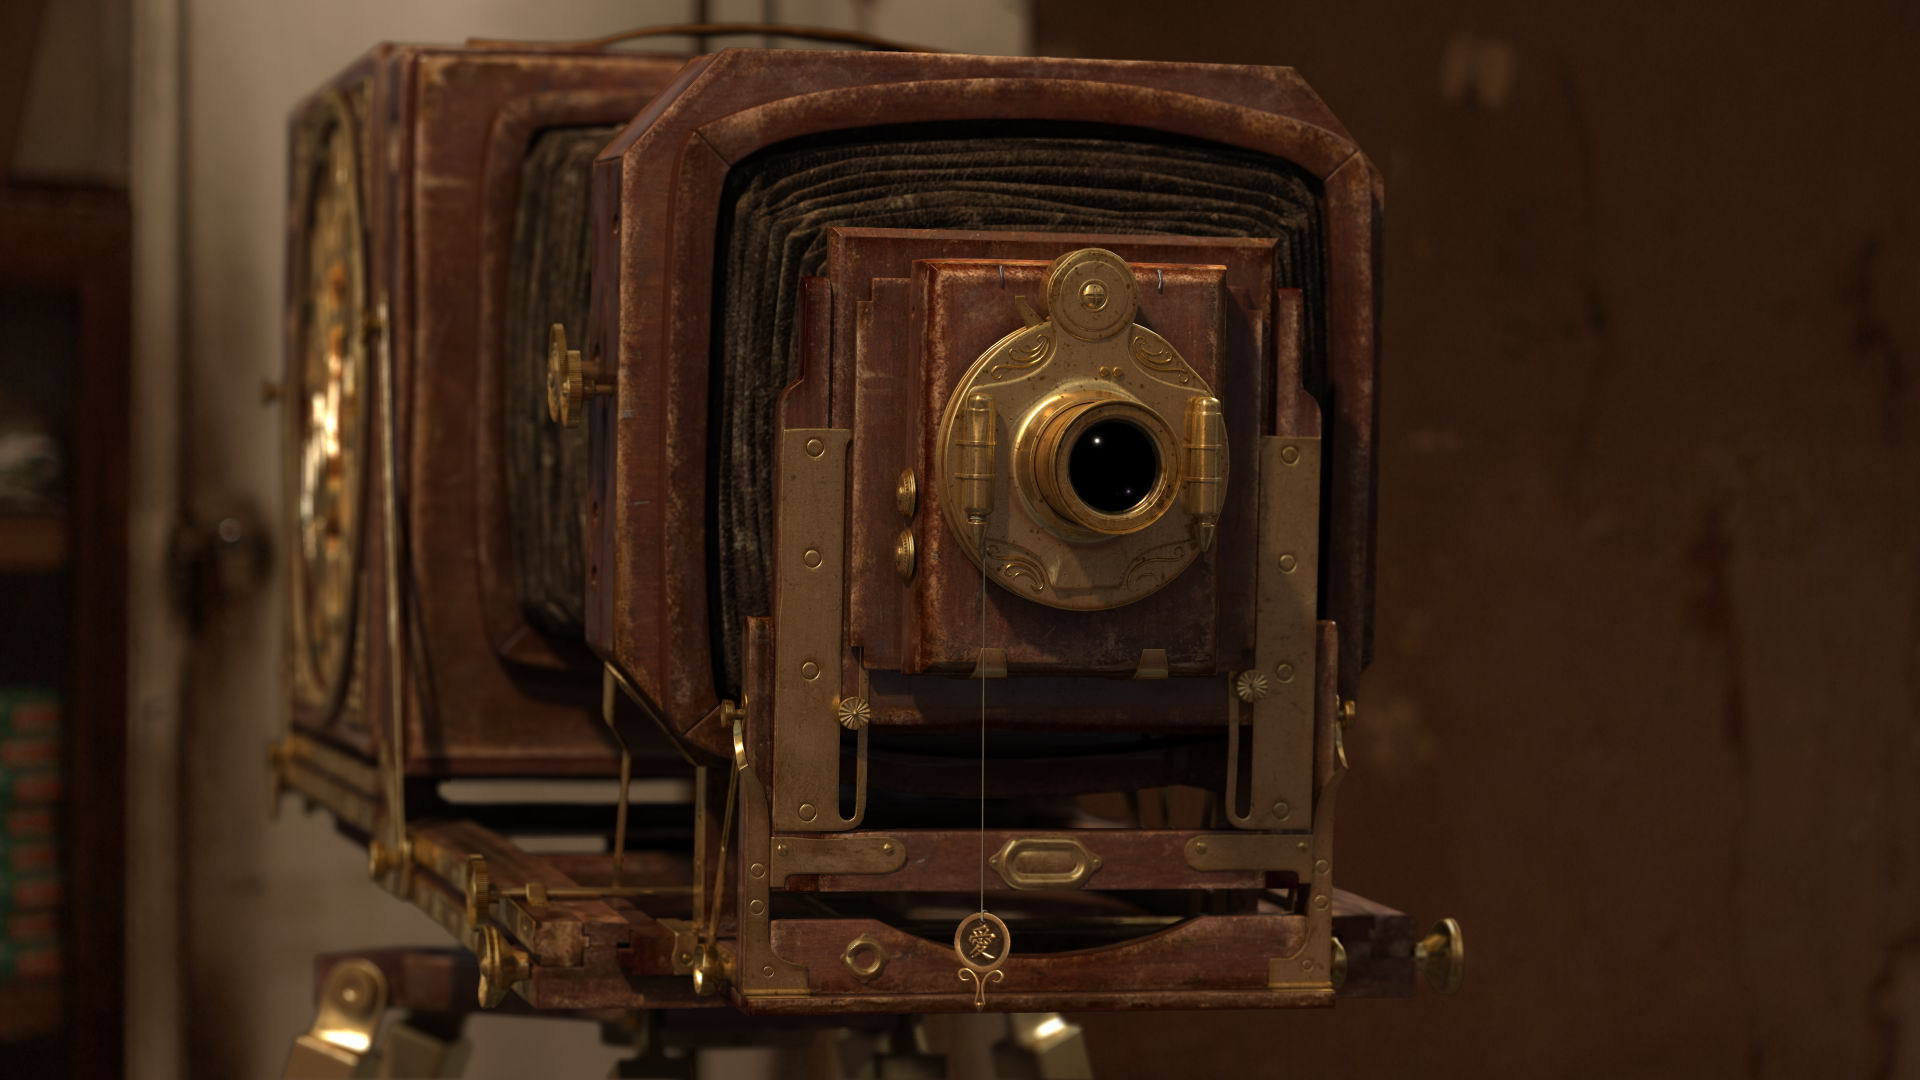 Старые камеры фото. Кодак фотоаппарат 1920. Старый фотоаппарат. Фотокамера 19 века. Старинные камеры и фотоаппараты.